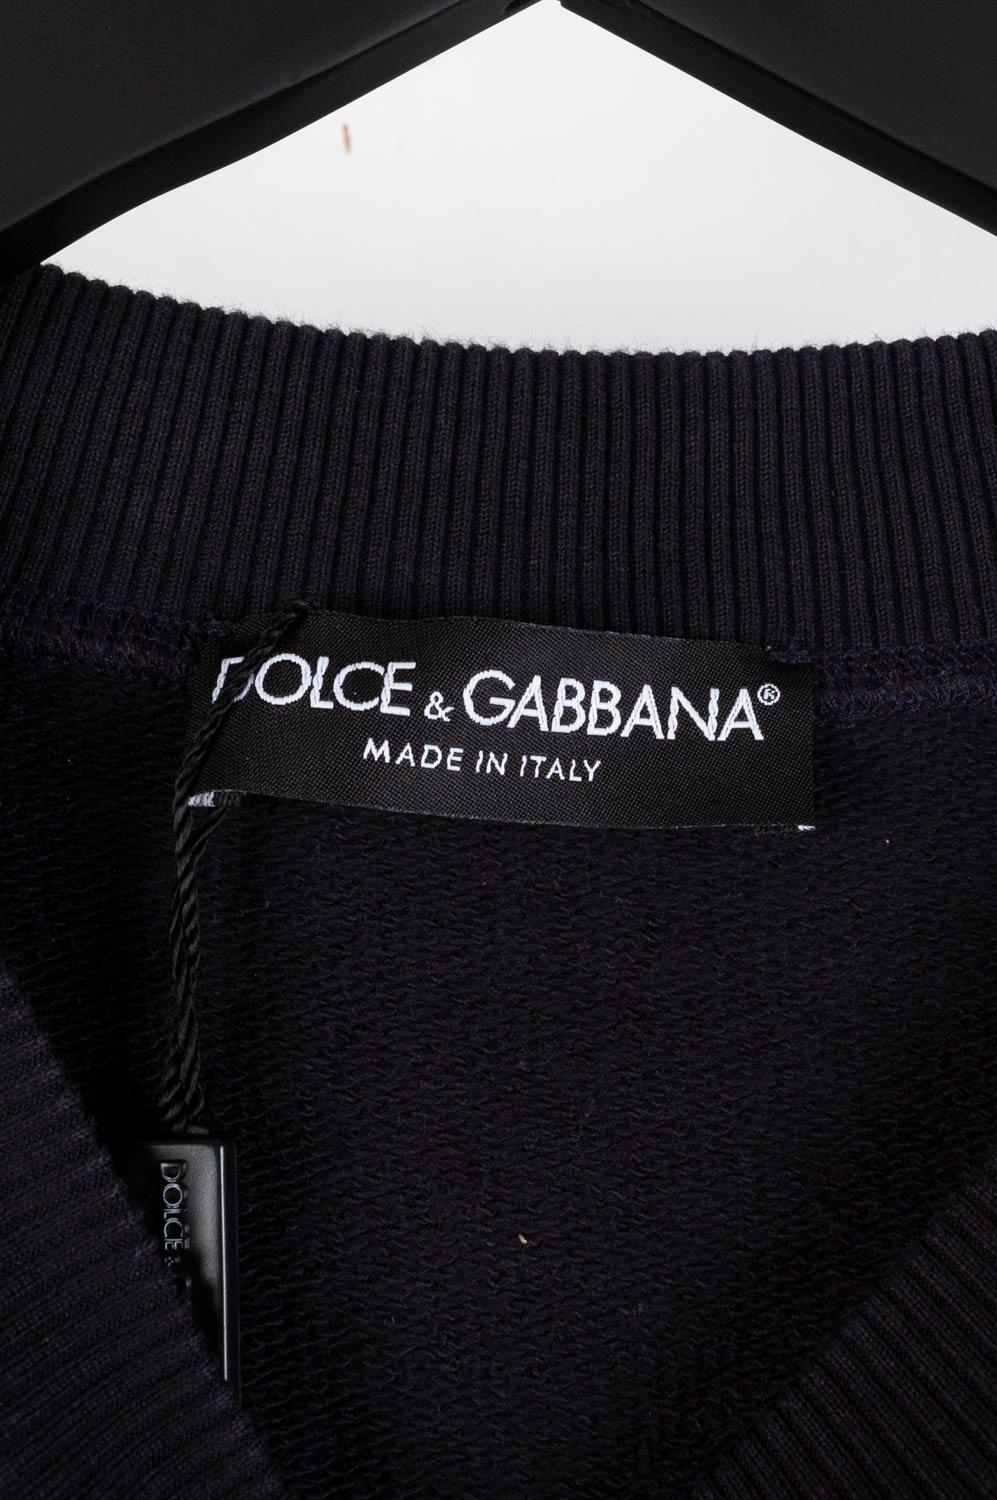 New Dolce&Gabbana Men Sweatshirt Jumper Pullover Red Cross, Size 46IT (S/M) S444 For Sale 2